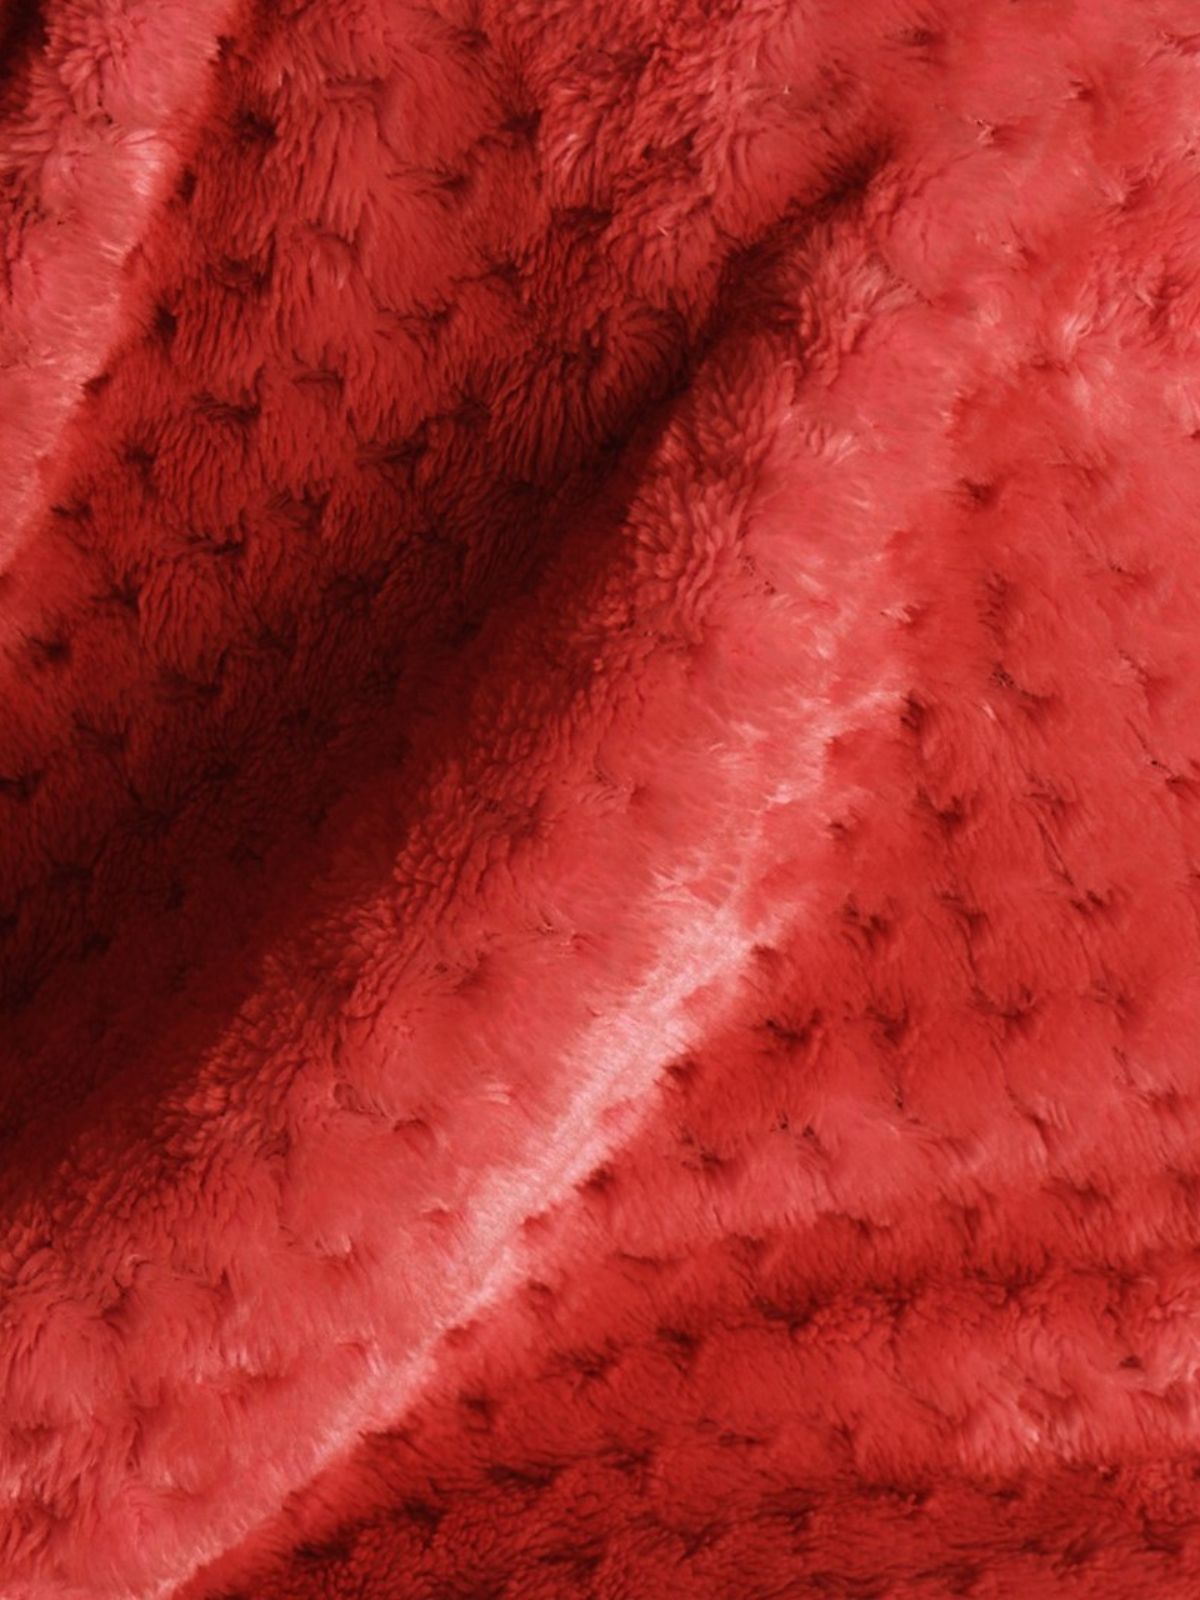 Plaid Coperta Shleepy in colore rosso 70x150 cm.-5